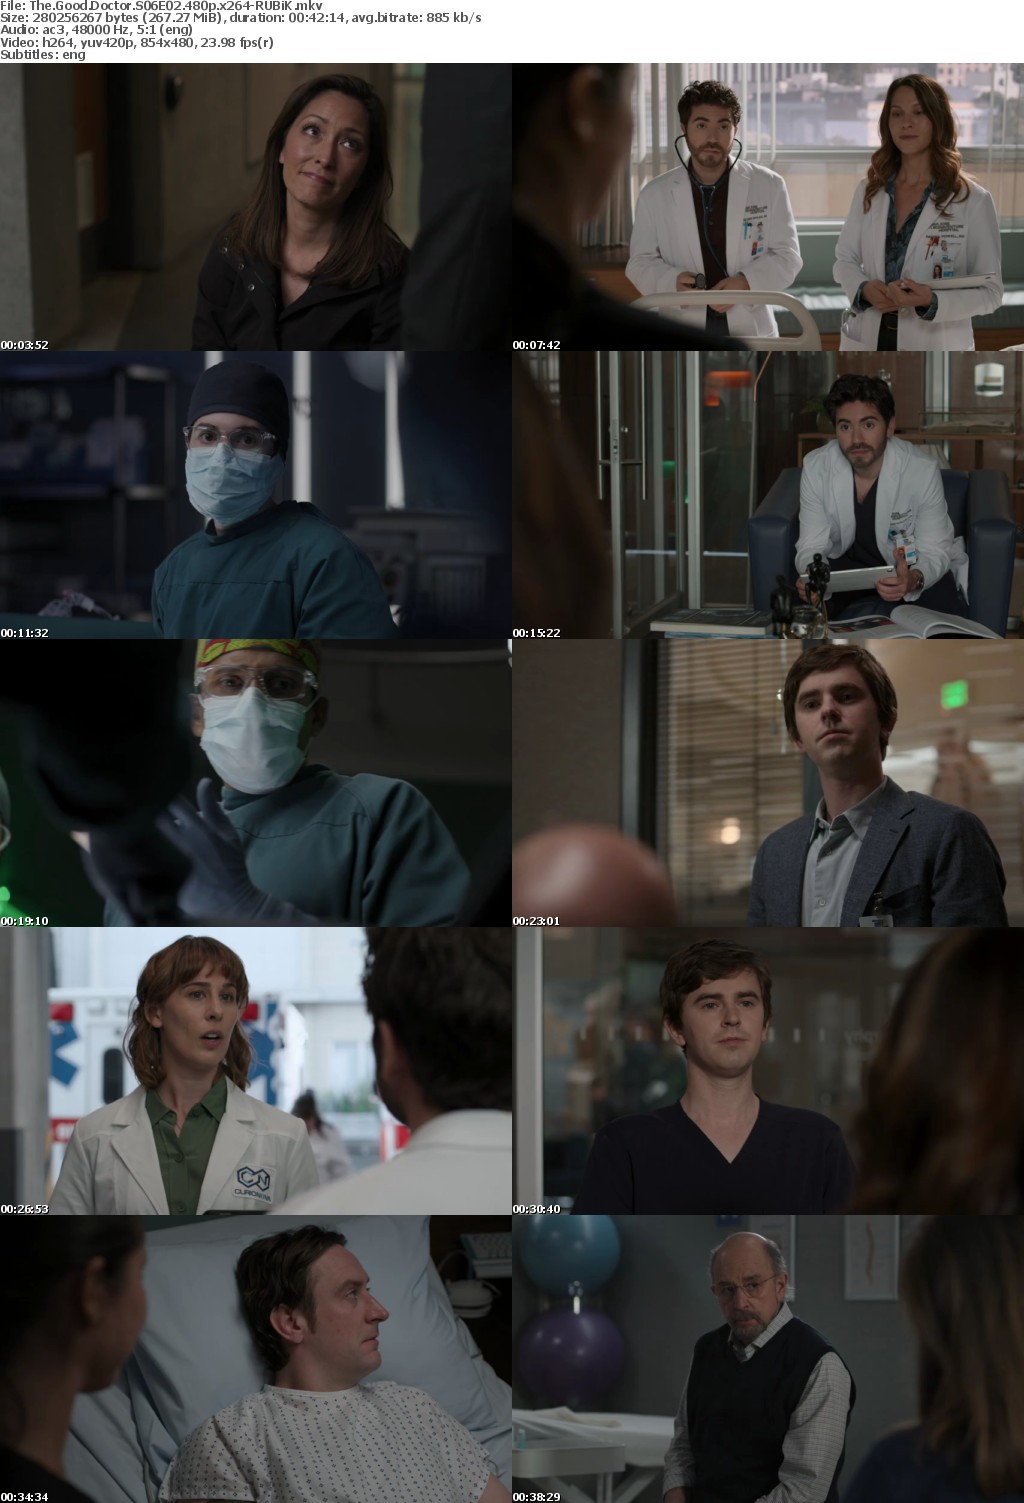 The Good Doctor S06E02 480p x264-RUBiK